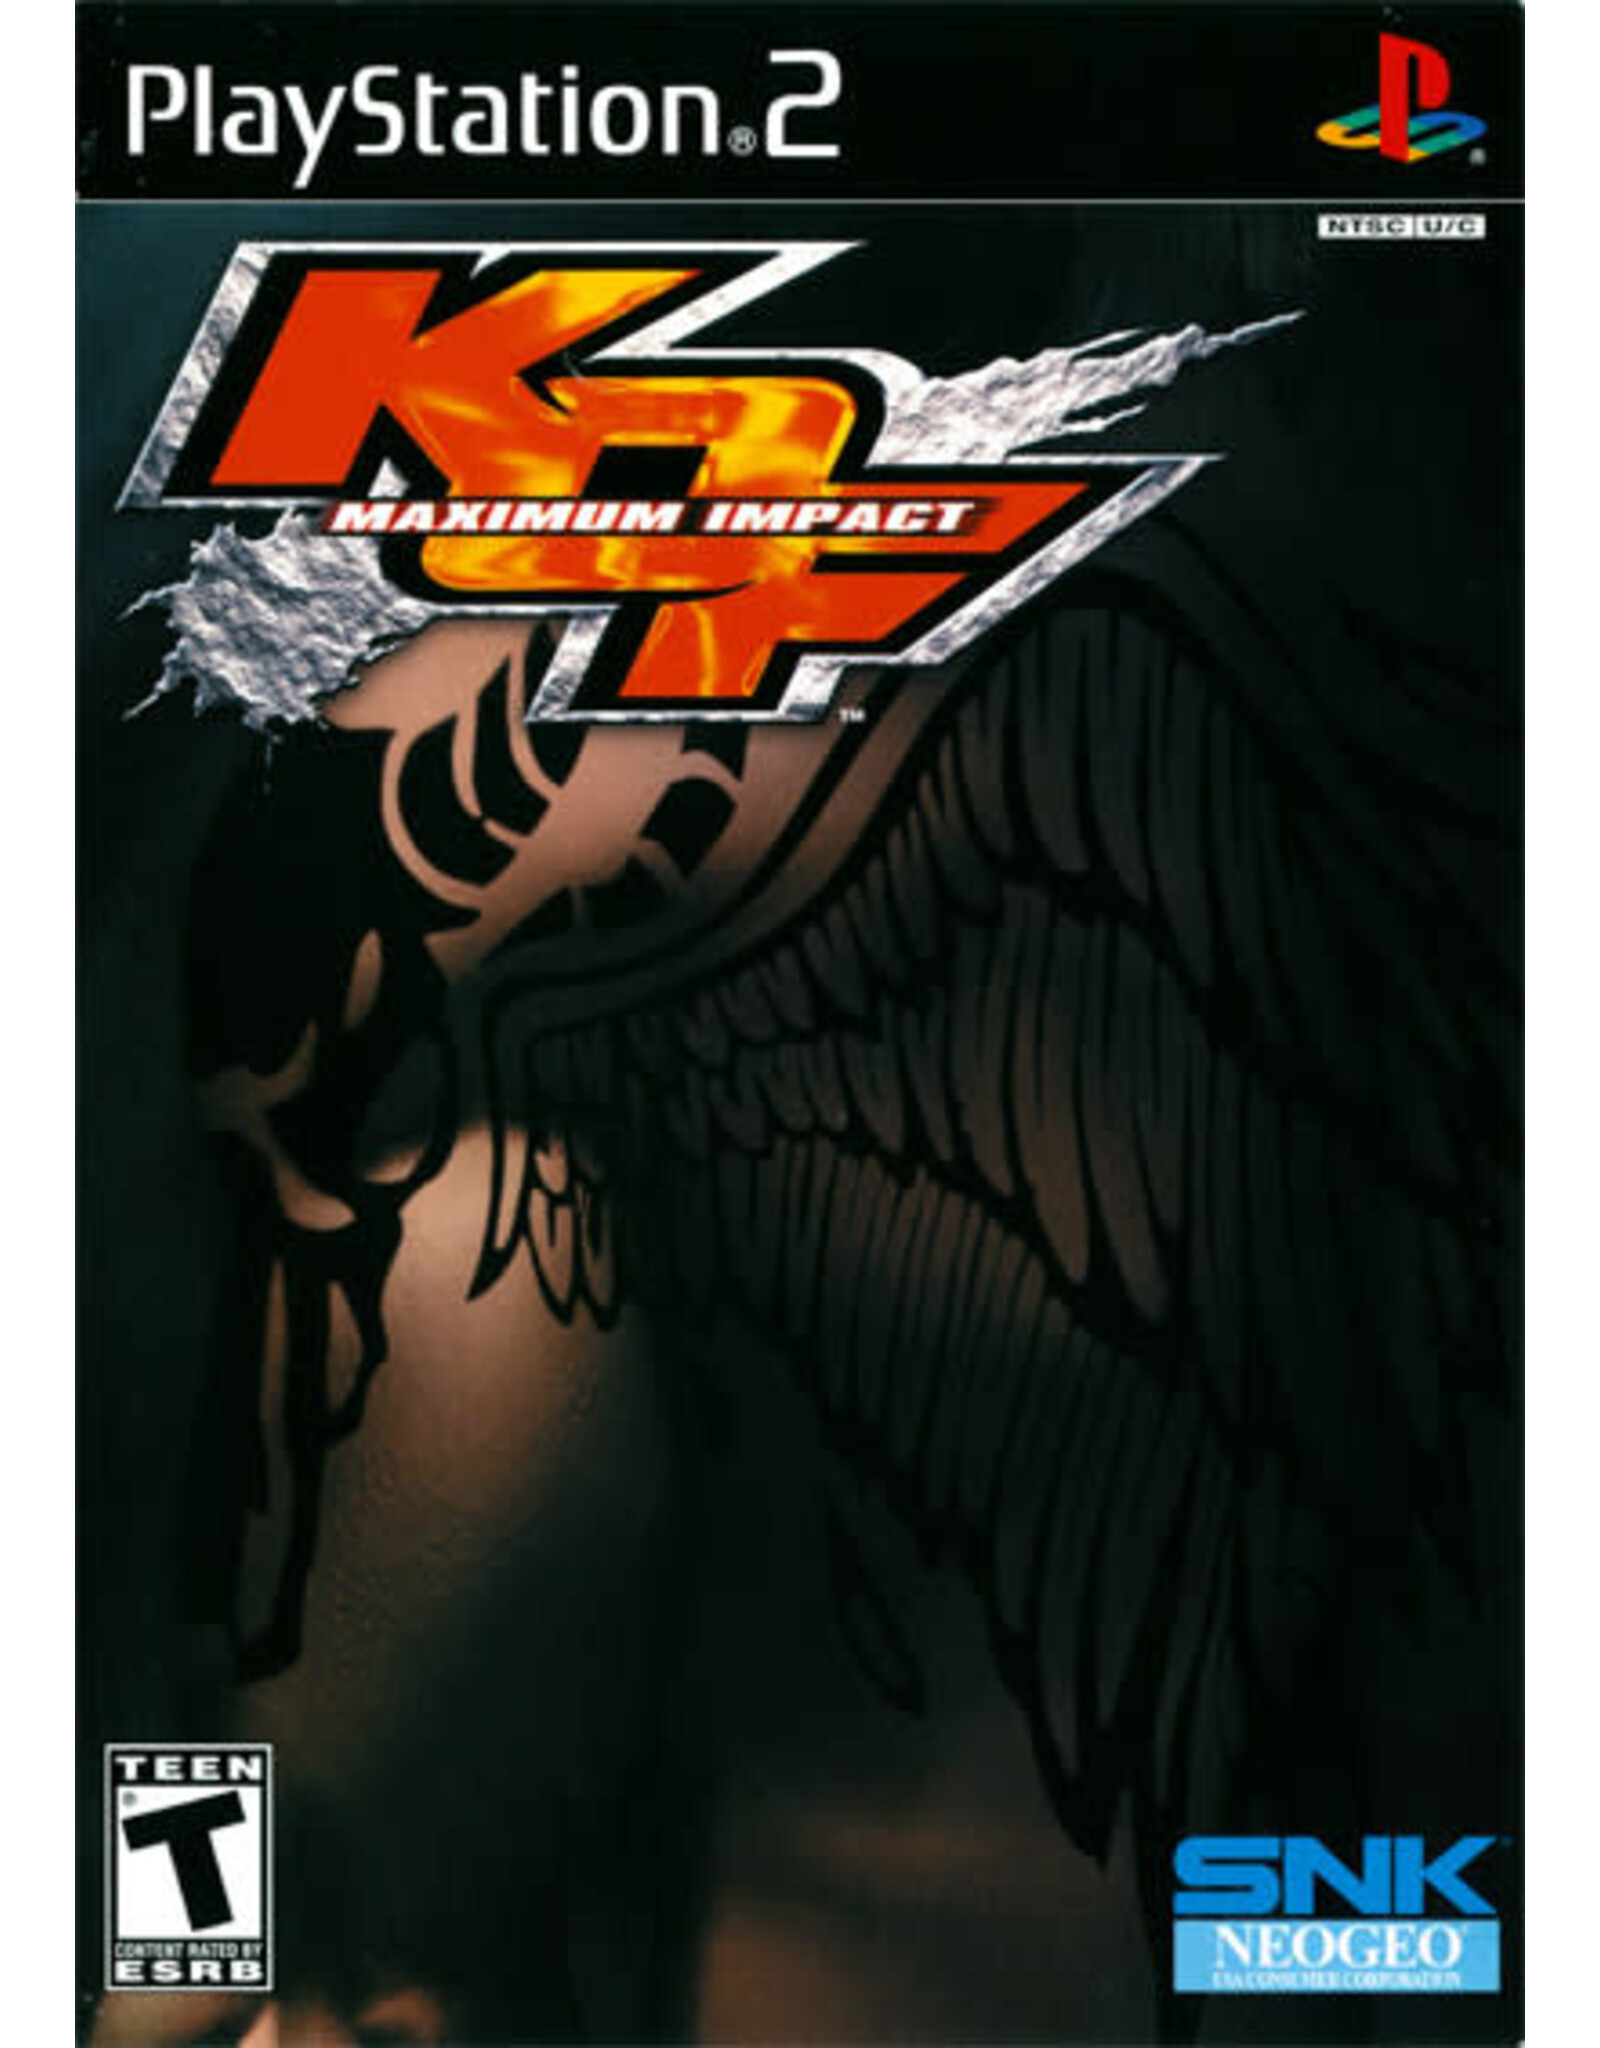 Playstation 2 King of Fighters Maximum Impact (CiB)